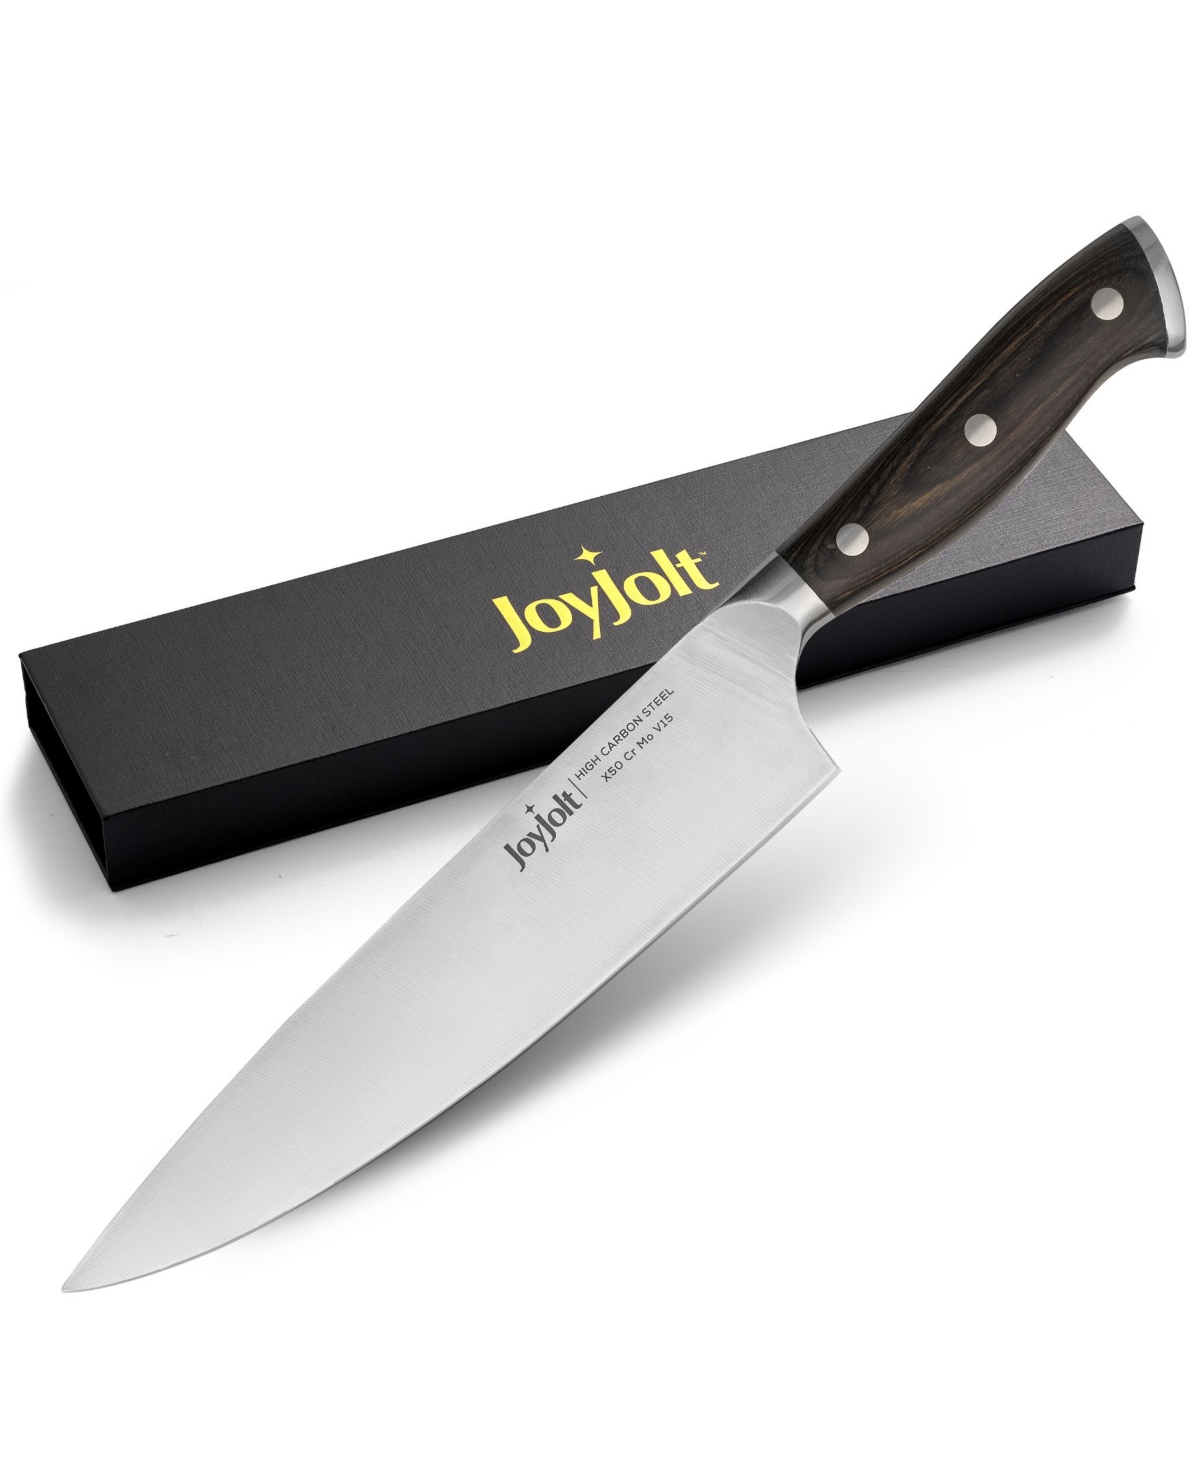 Joyjolt 8"  Chef Knife High Carbon Steel Kitchen Knife In Gray